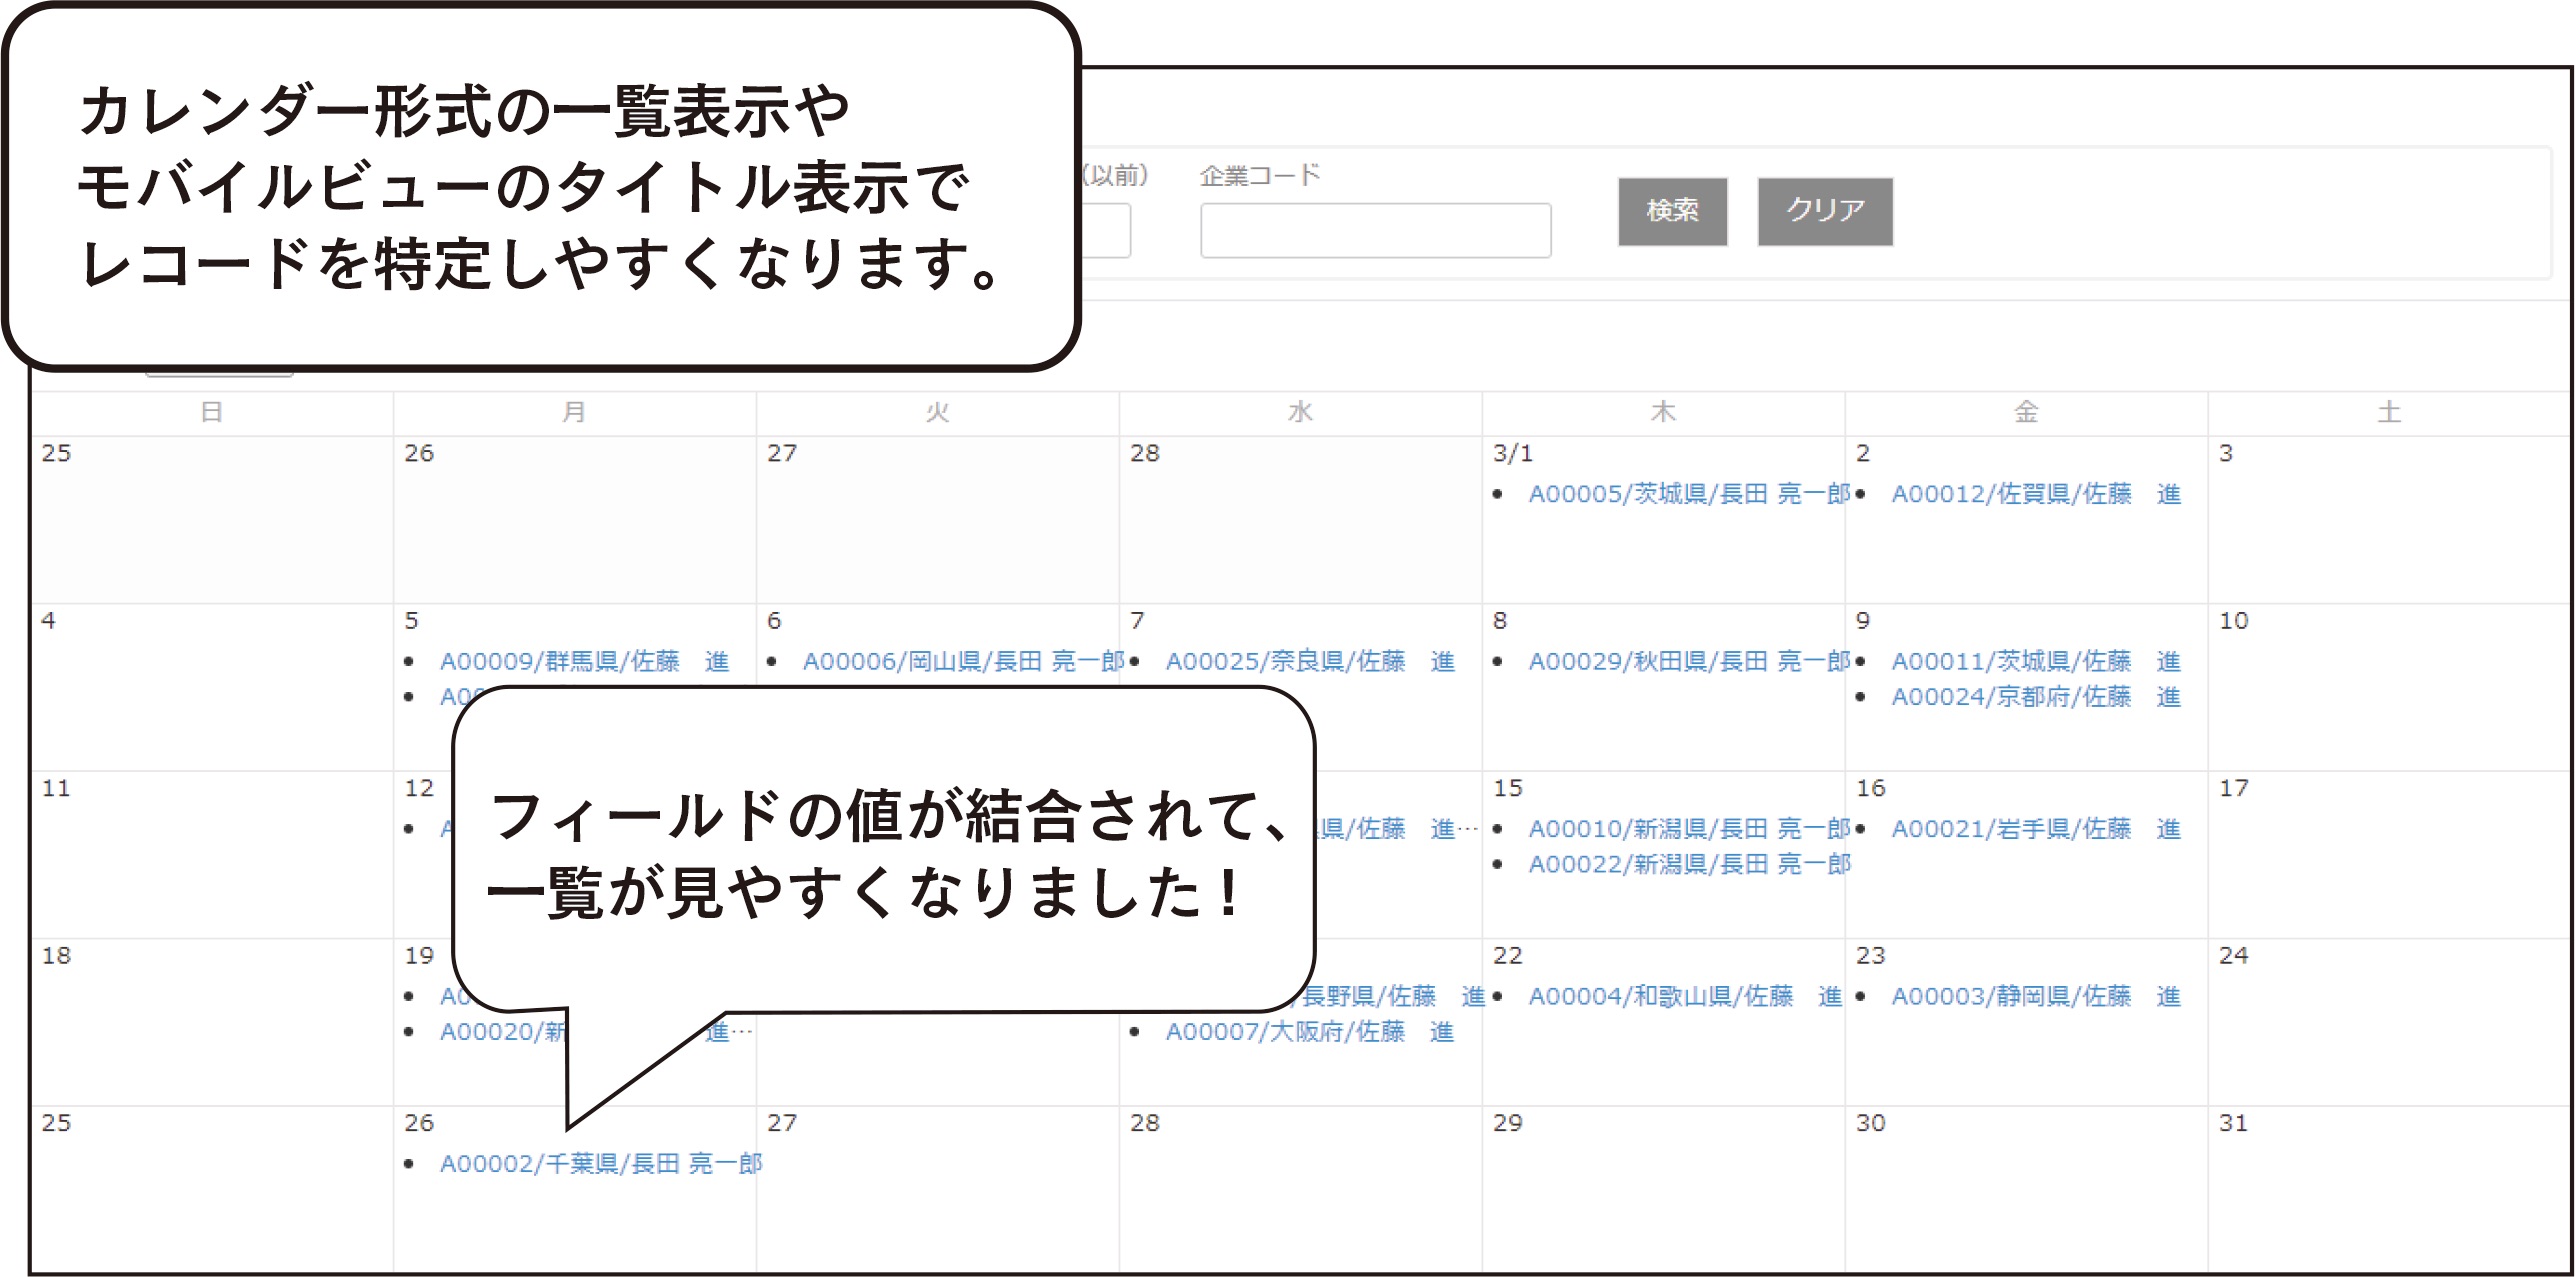 kintone_mojiretsu_plugin-image1-1.jpg